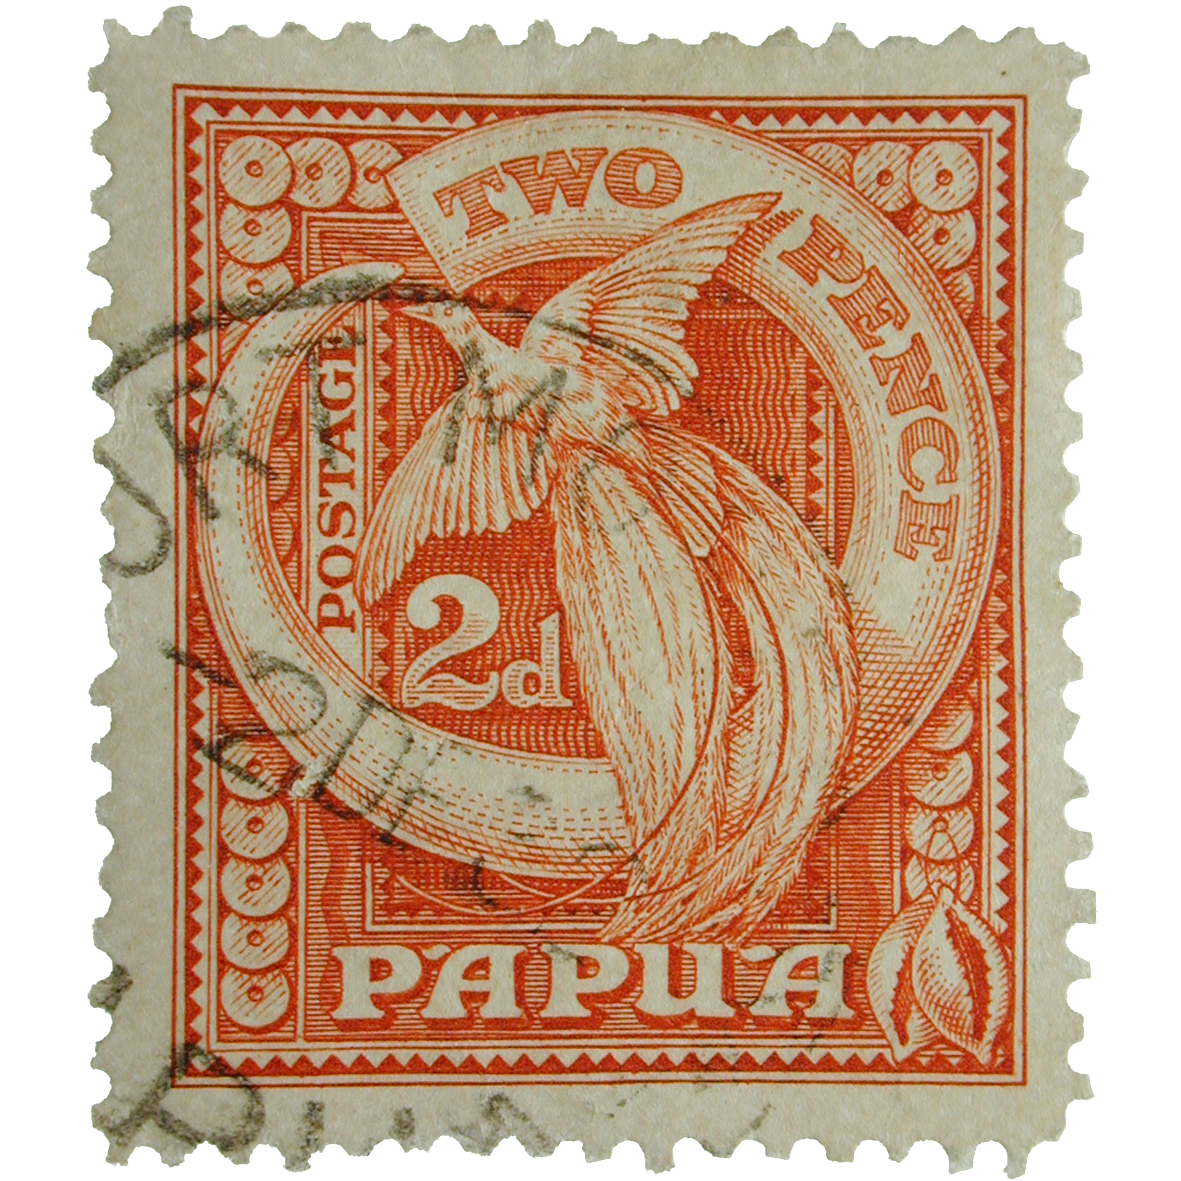 Postage Stamp PNG Image HD